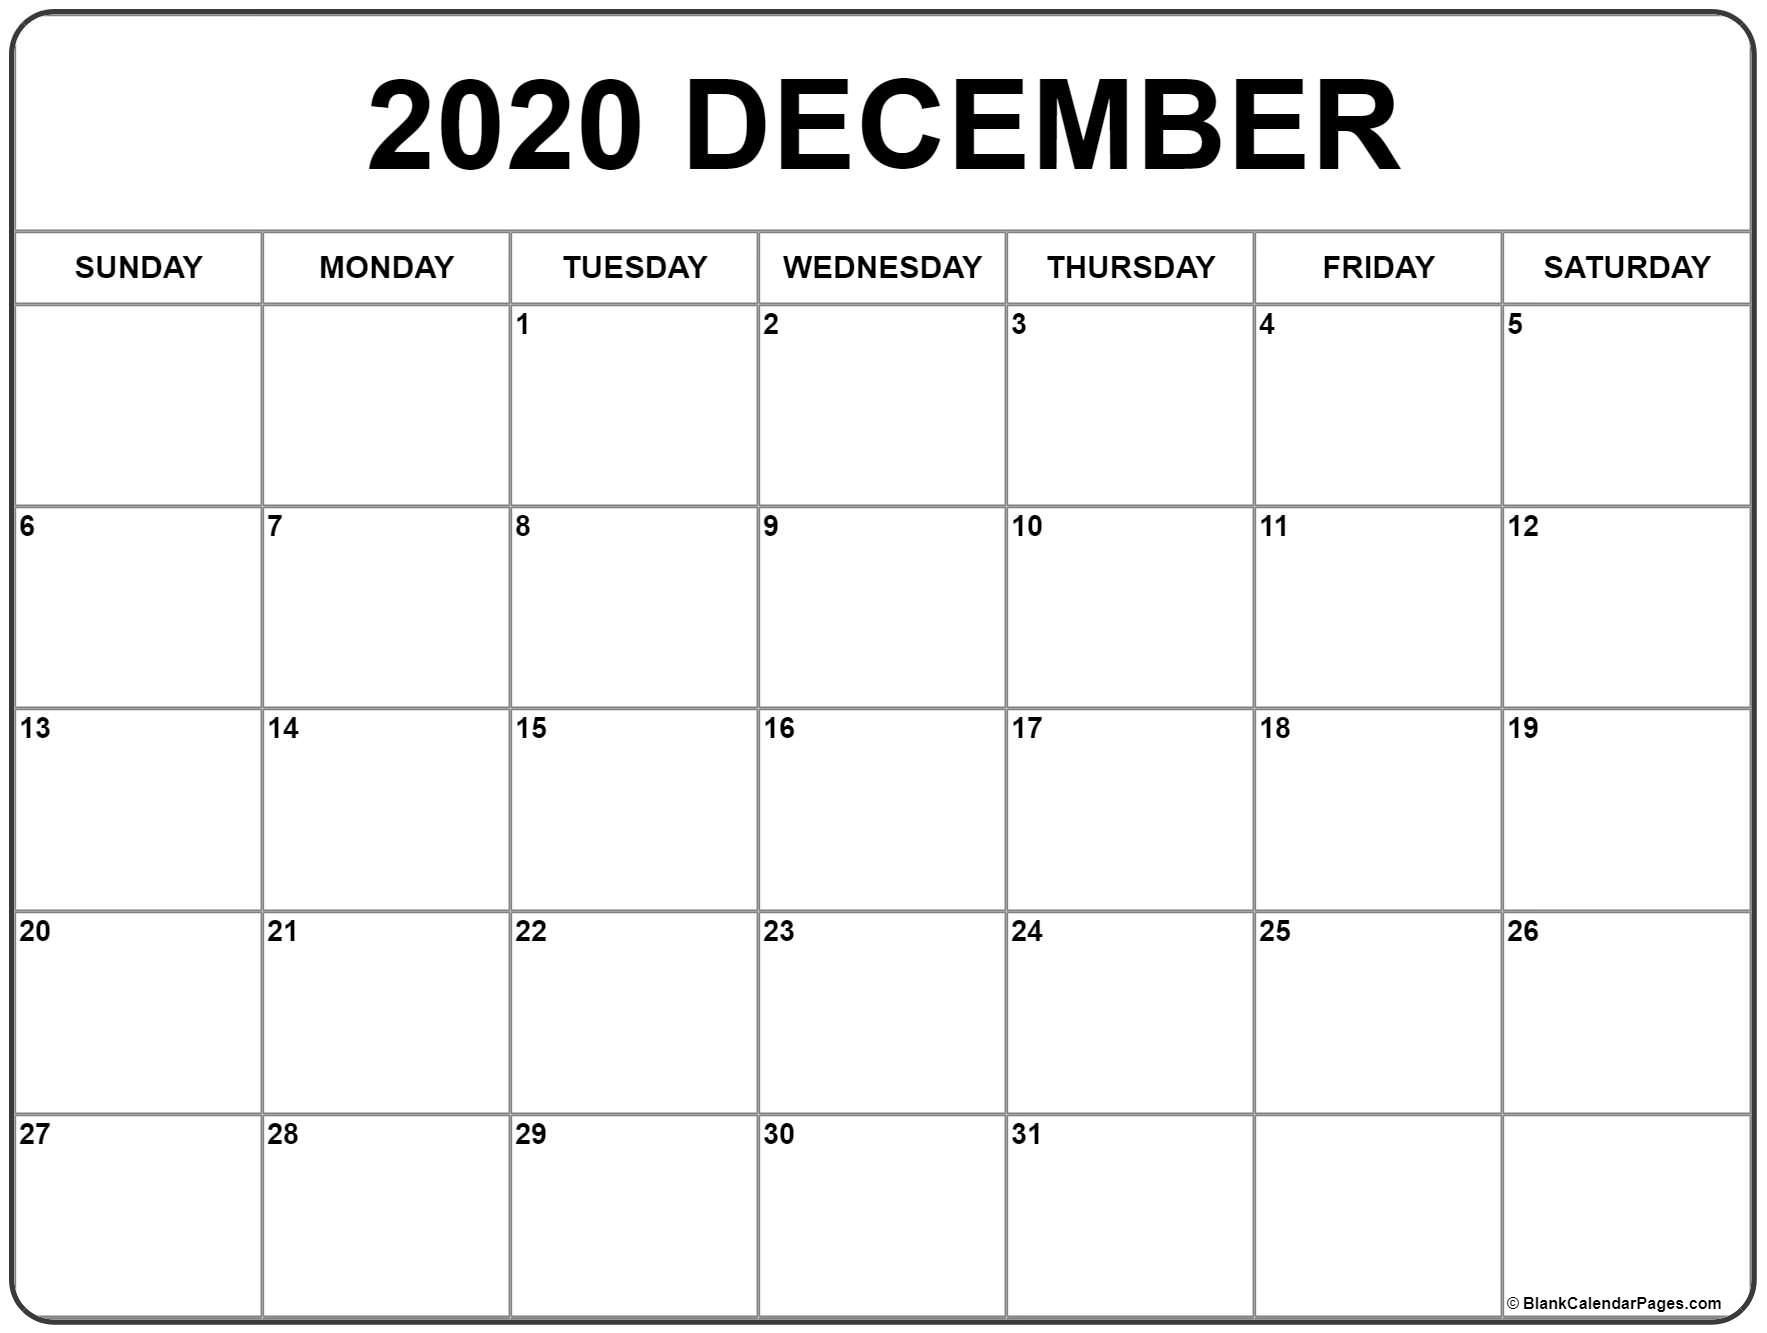 December 2020 Printable Calendar Template #2020Calendars